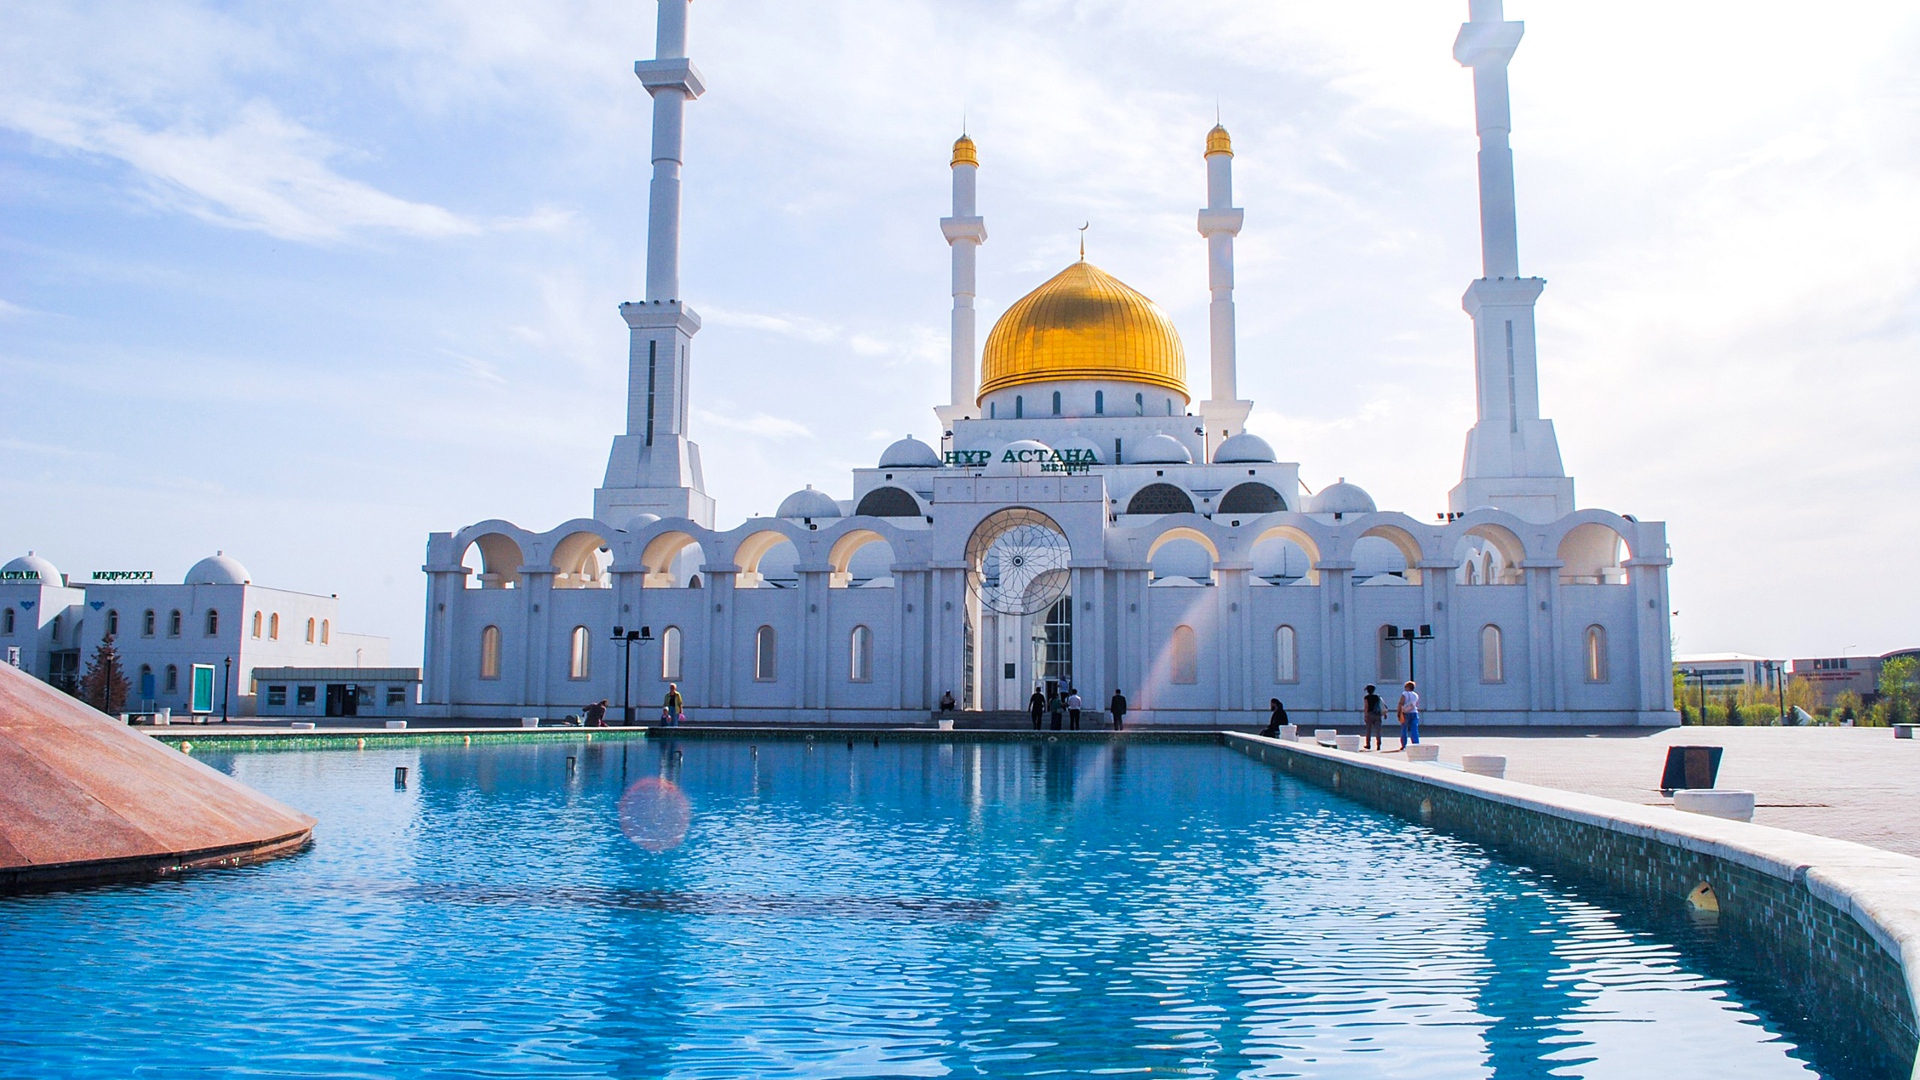 44+] Mosque HD Wallpapers 1080p - WallpaperSafari